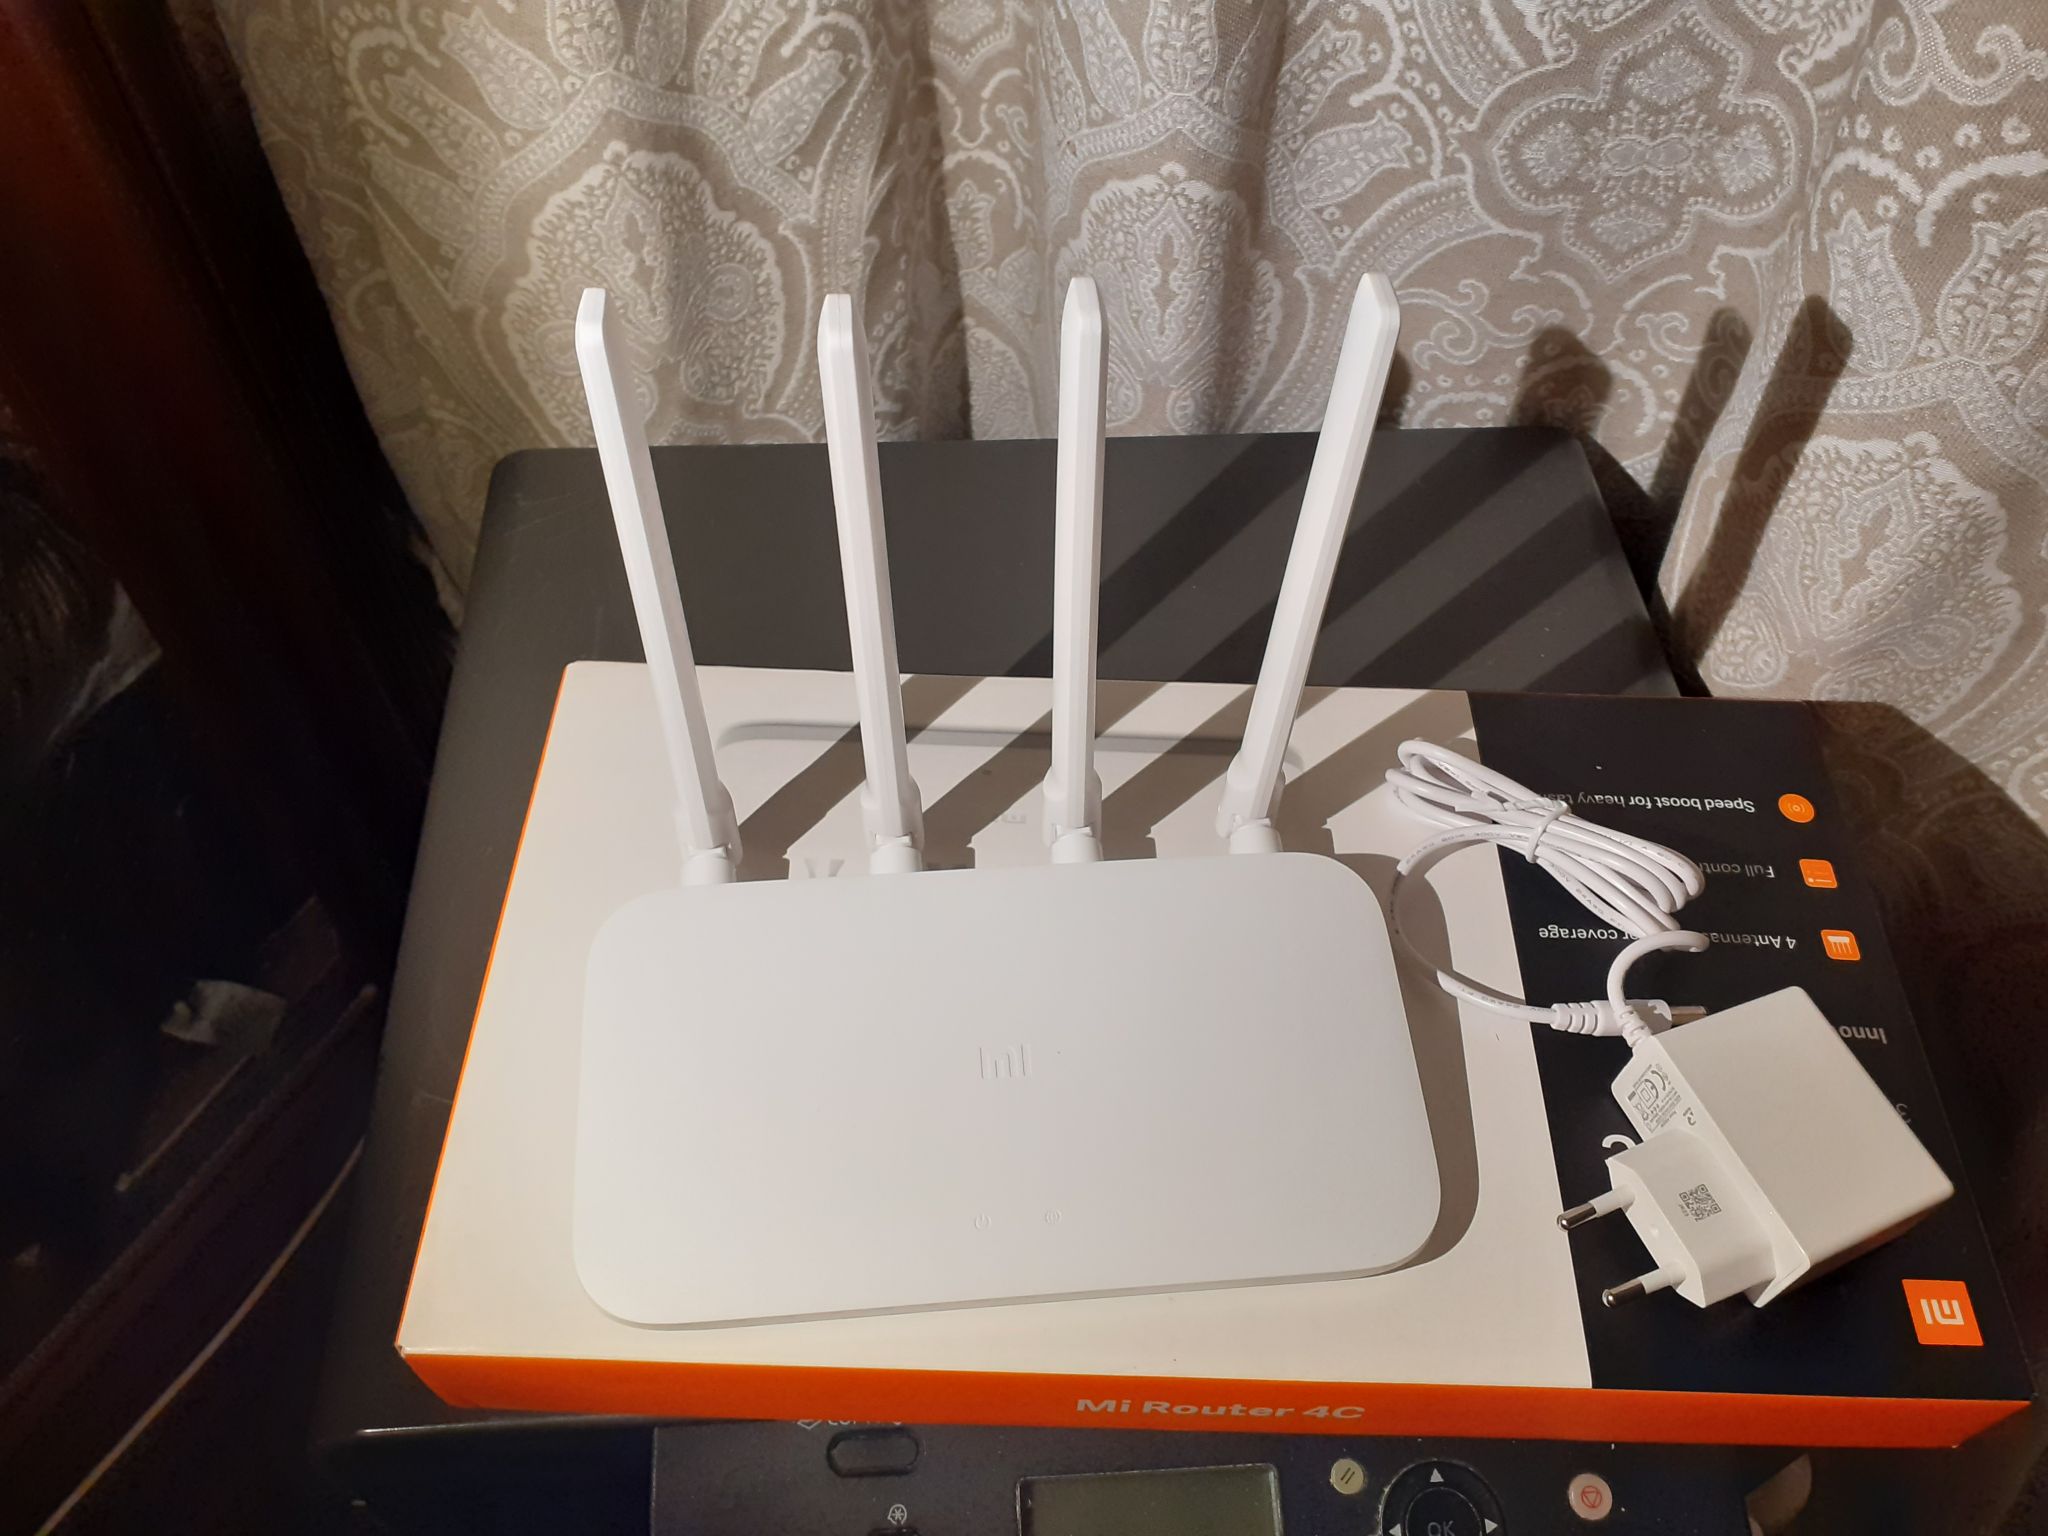 Xiaomi Mi Router 4 Usb Mod